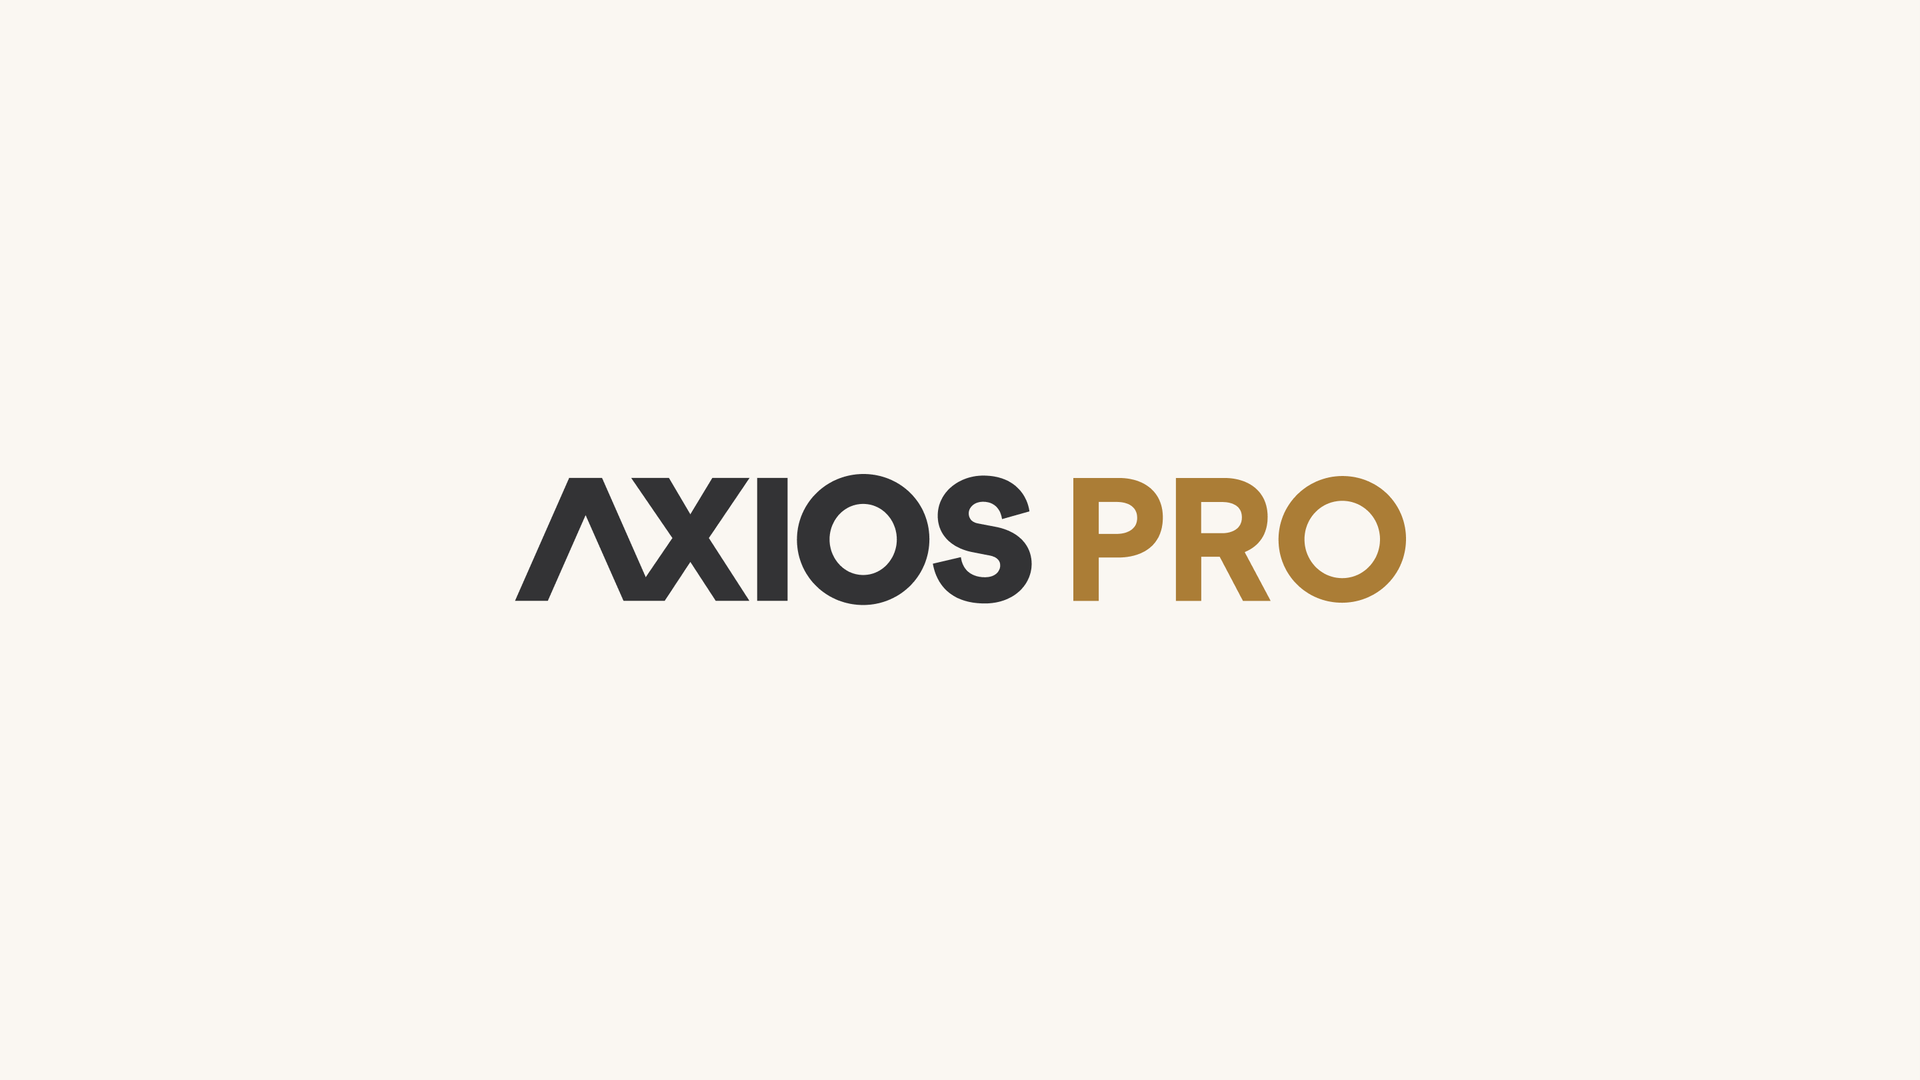 Axios Pro logo.